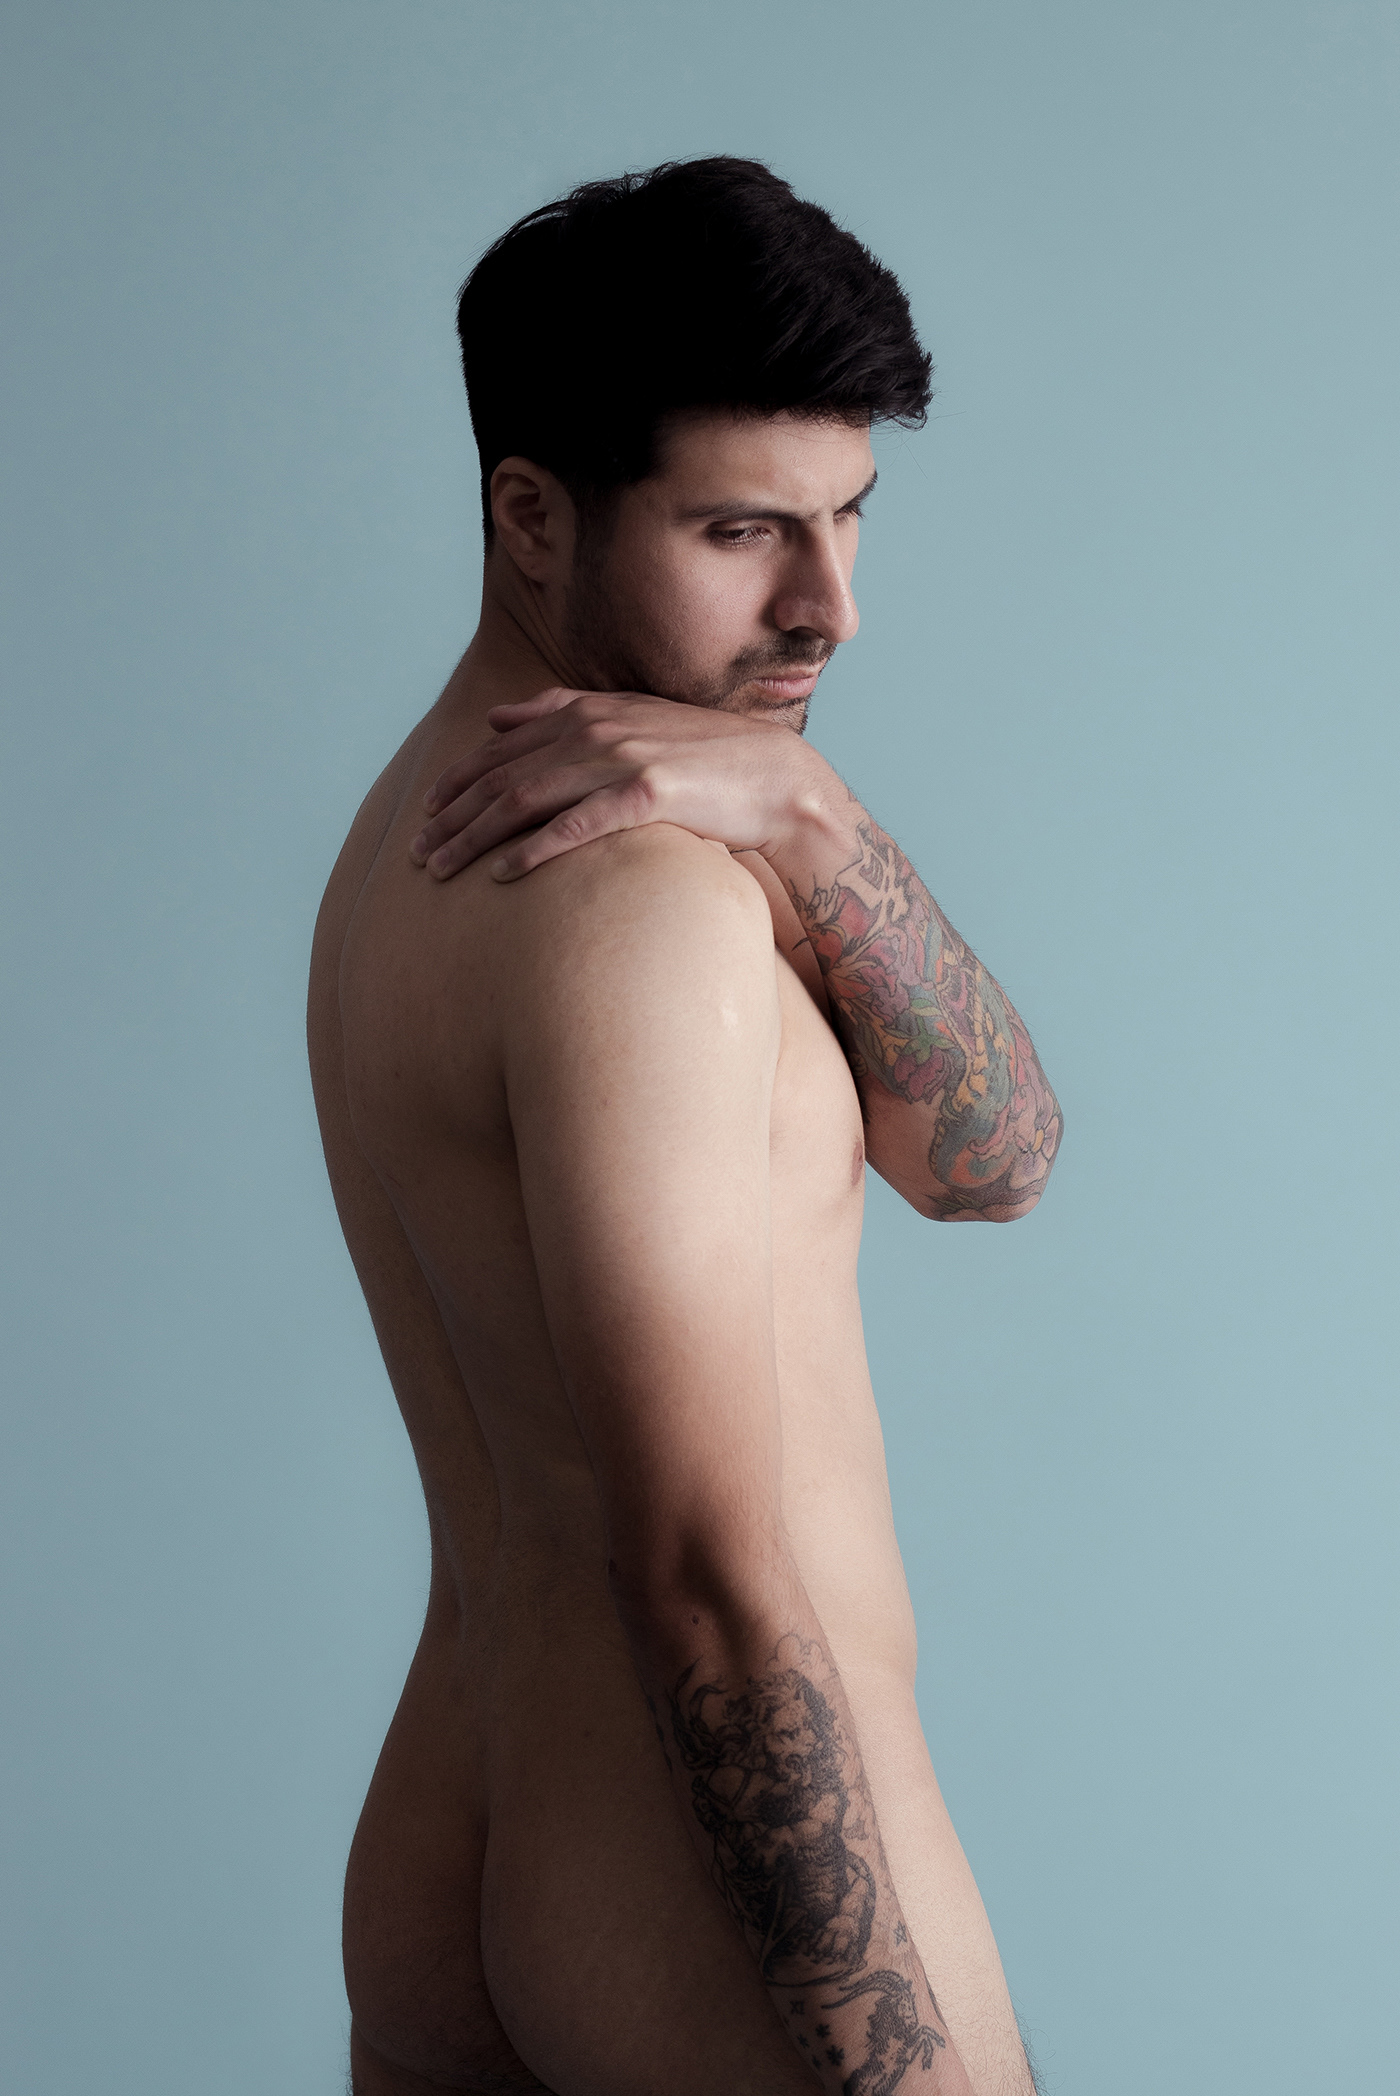 Rodrigo cesar - nude photos